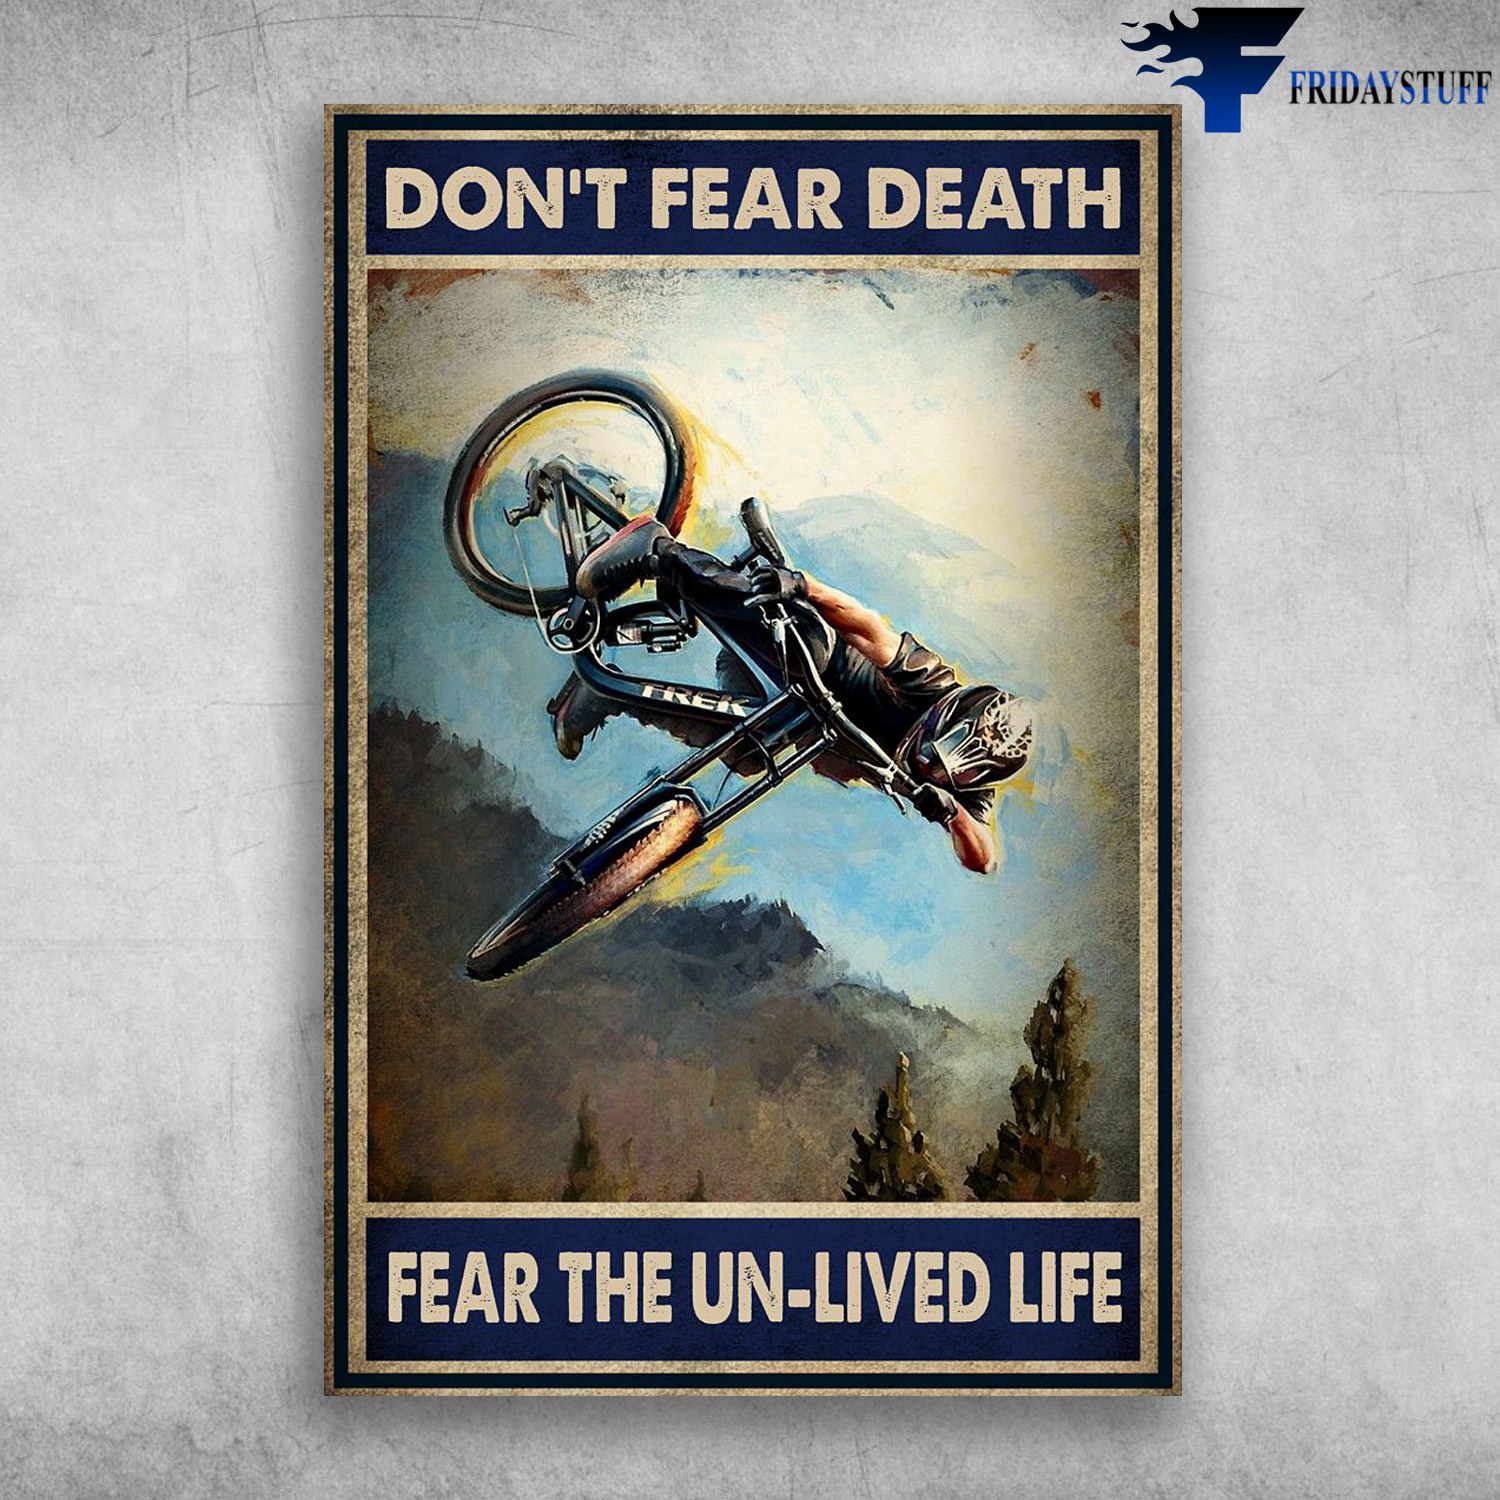 Man Motocross - Don't Fear Death, Fear The Un-Lived Life